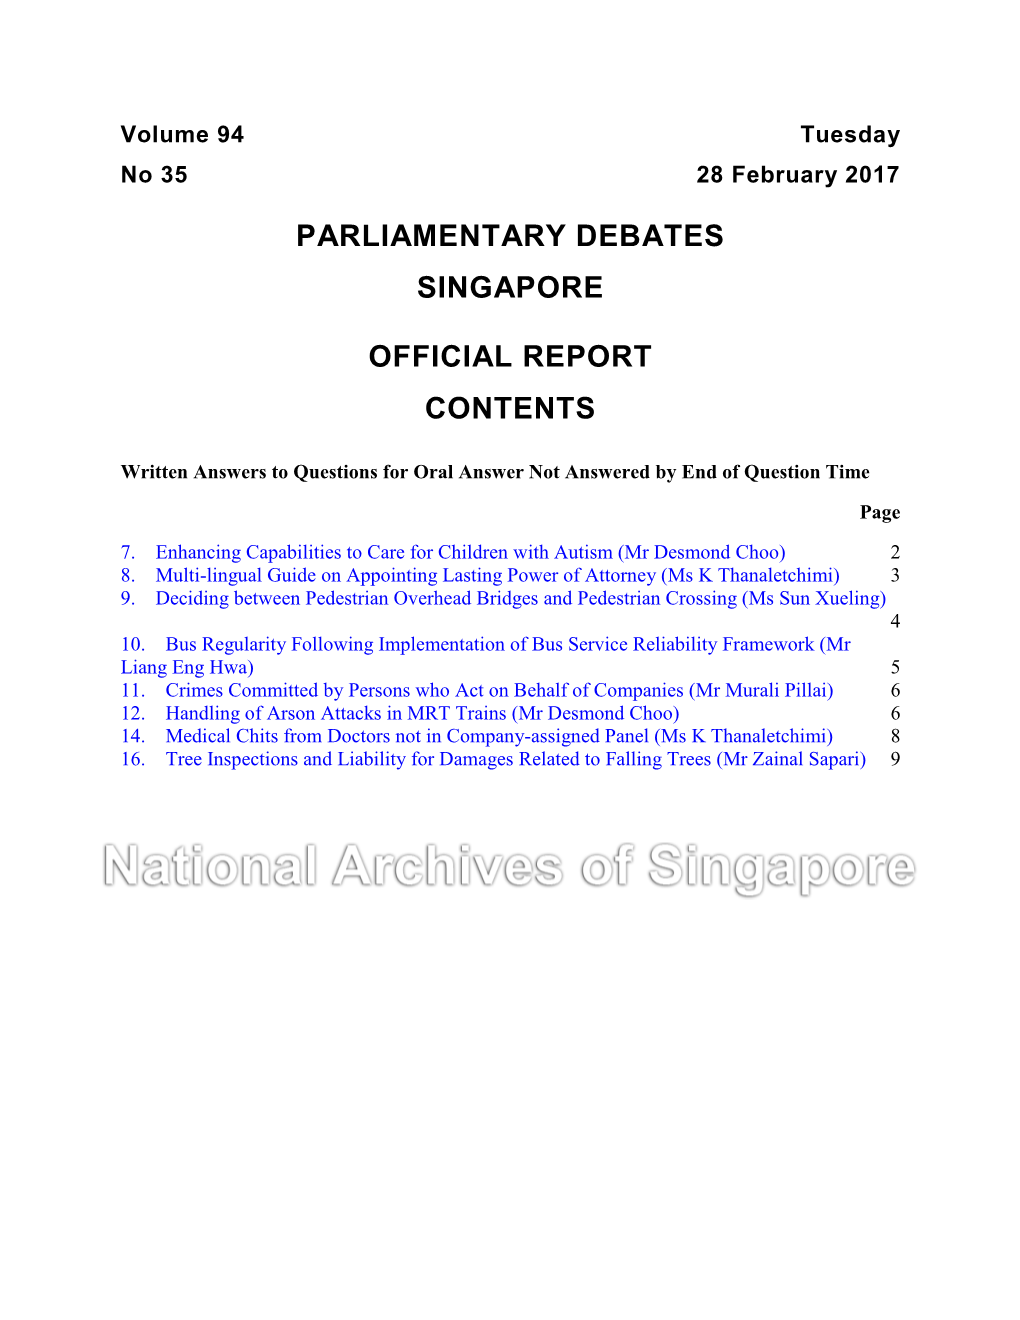 Parliamentary Debates Singapore Official Report